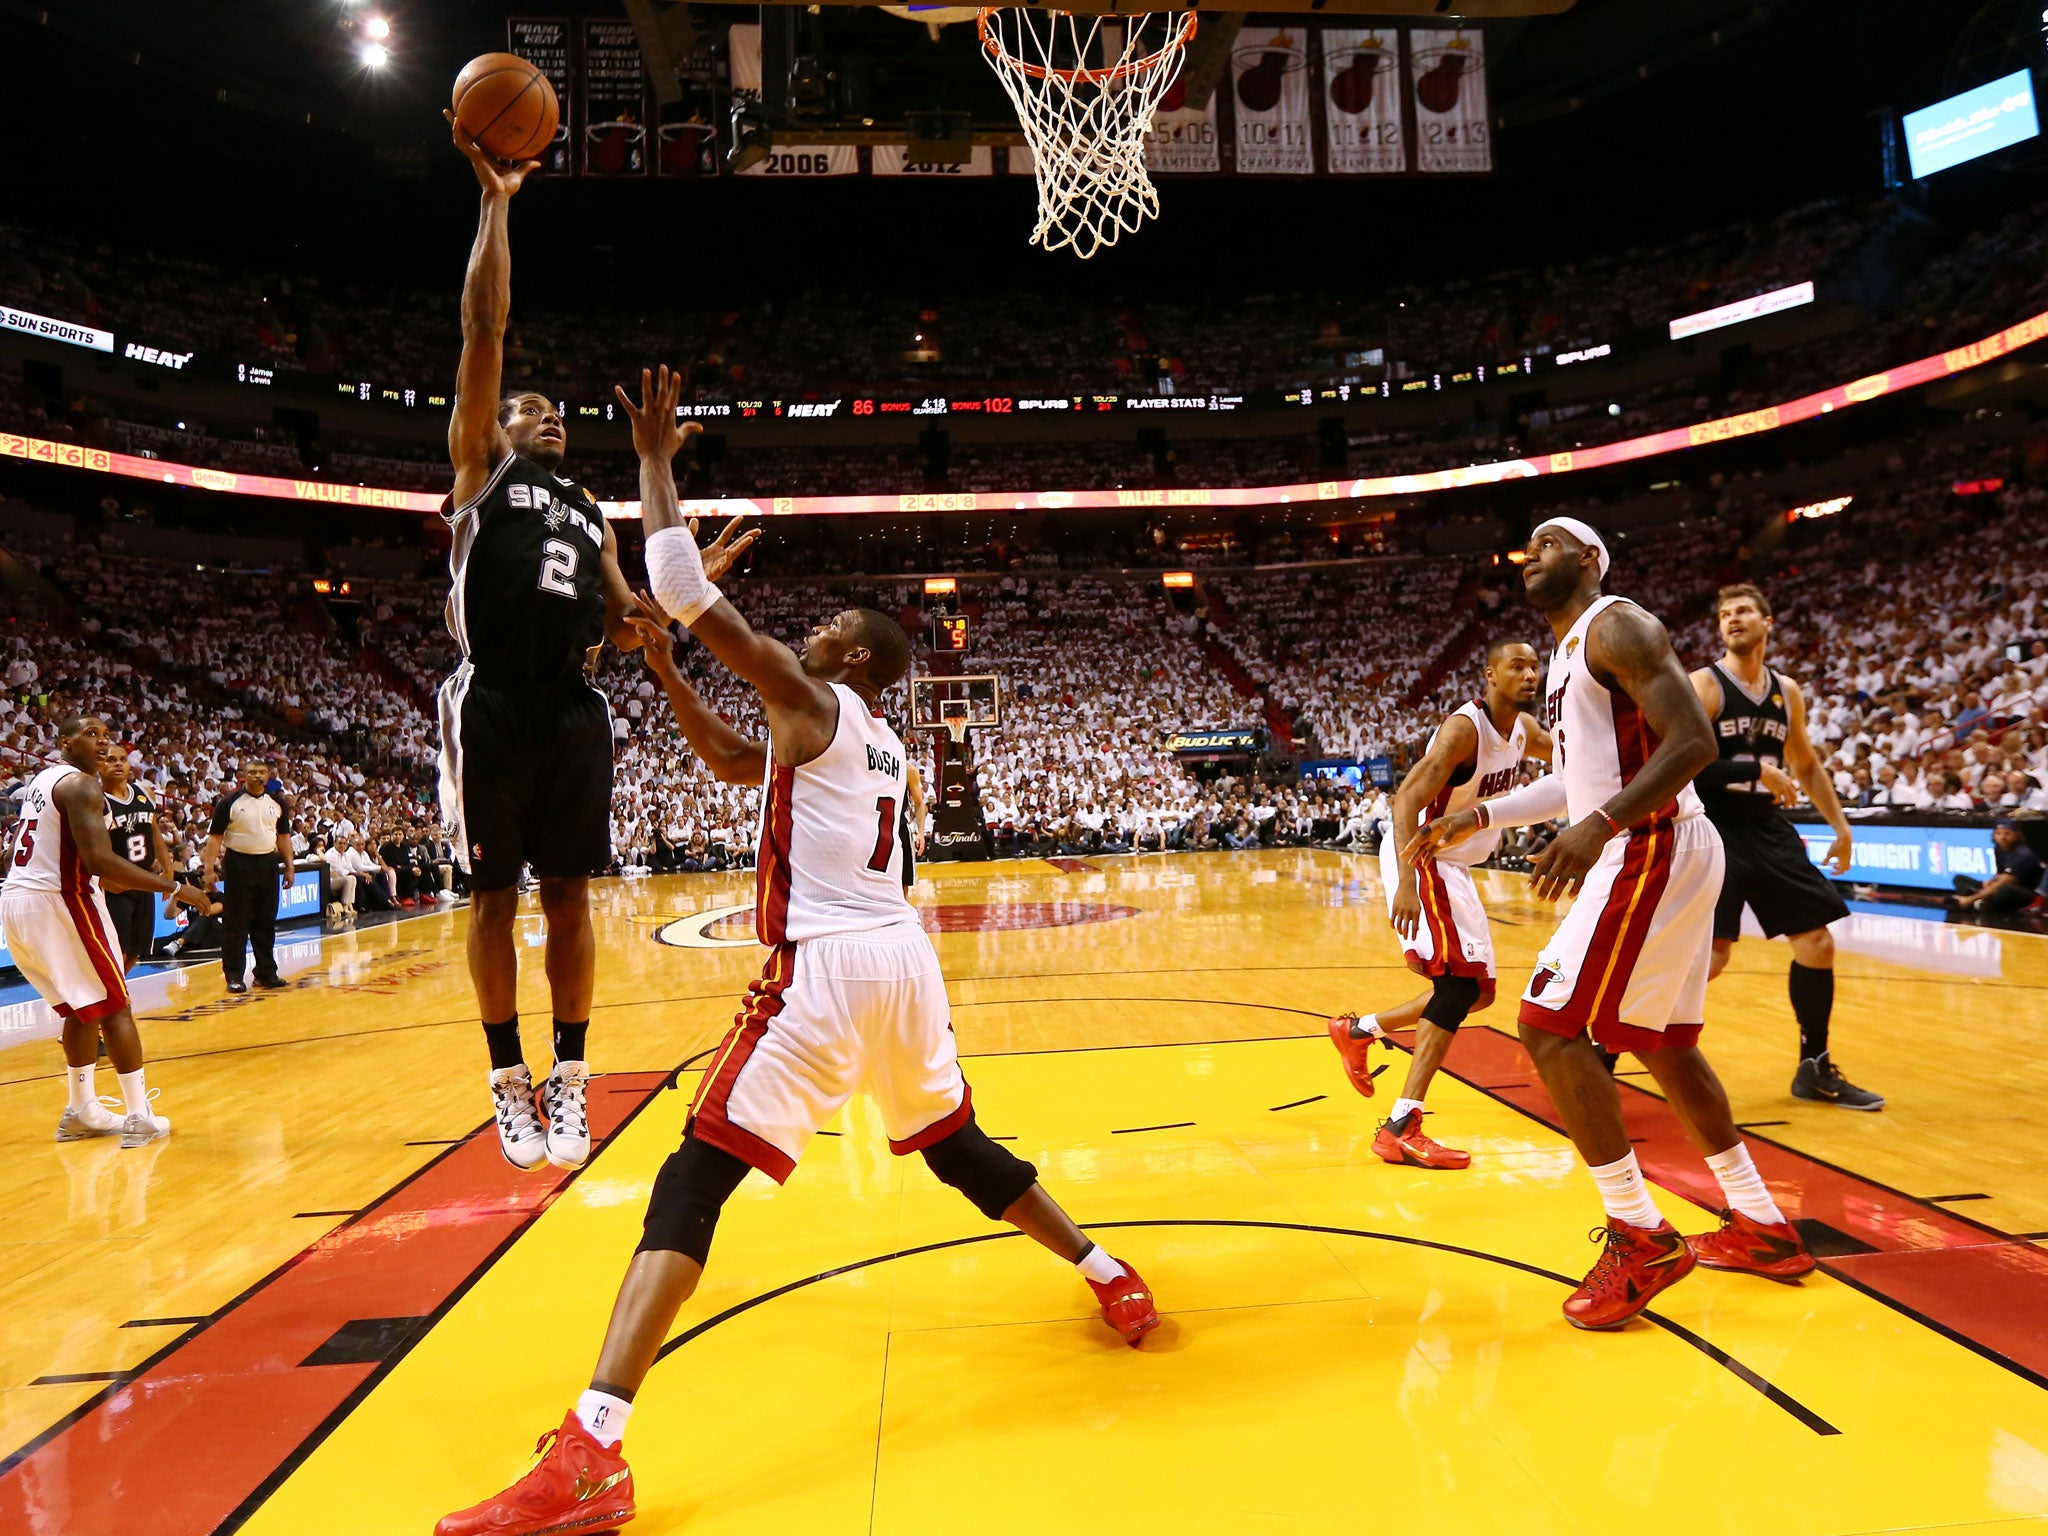 Kawhi Leonard scored 29 points as the San Antonio Spurs beat the Miami Heat 111-95